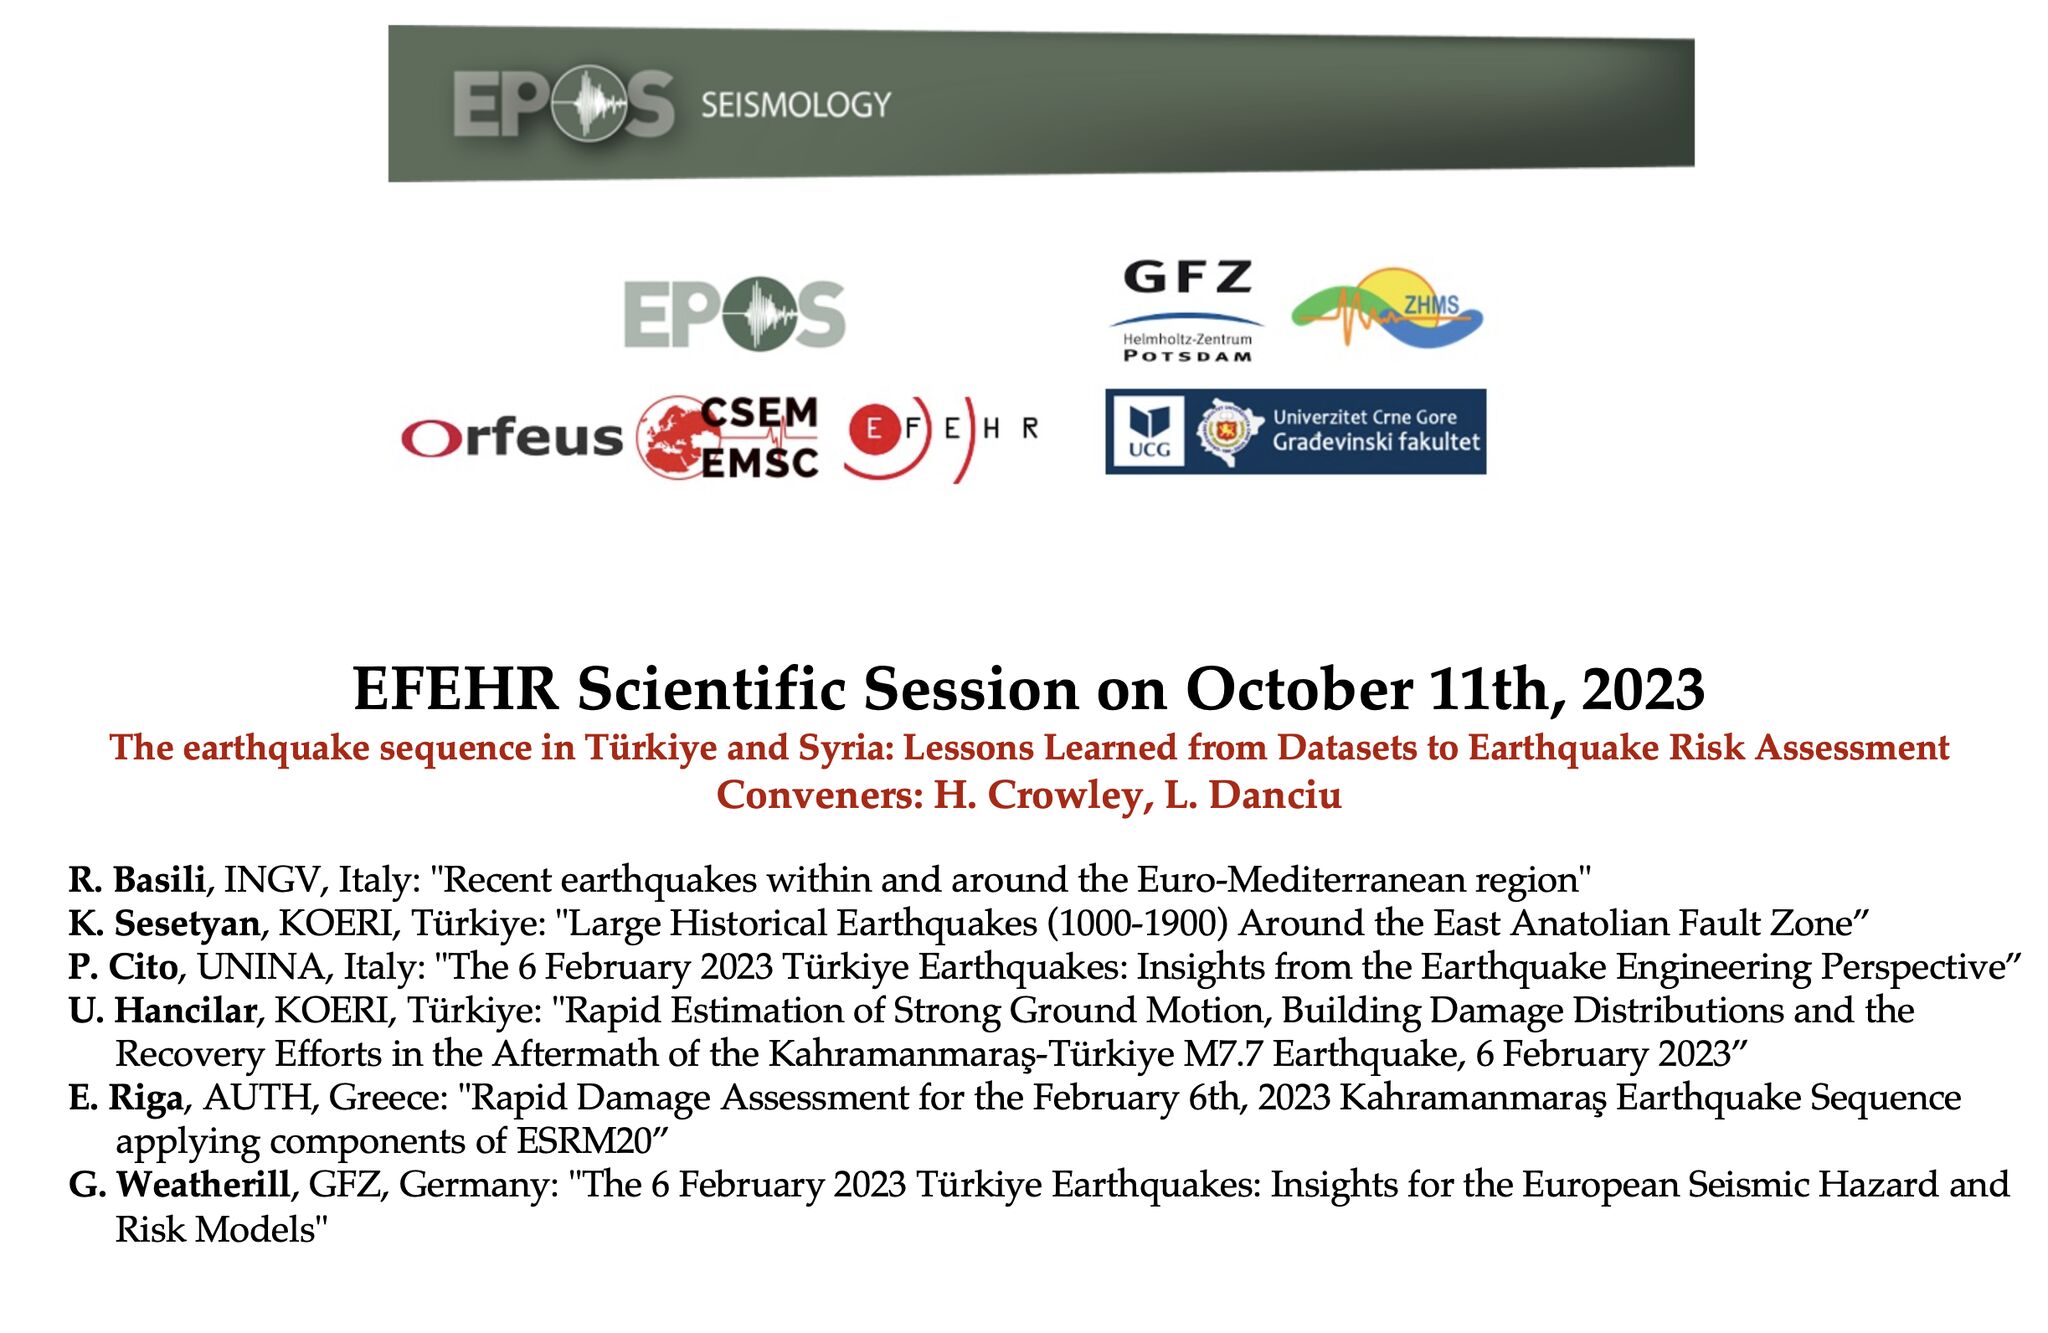 Invitation to the scientific session: October 11, 2023